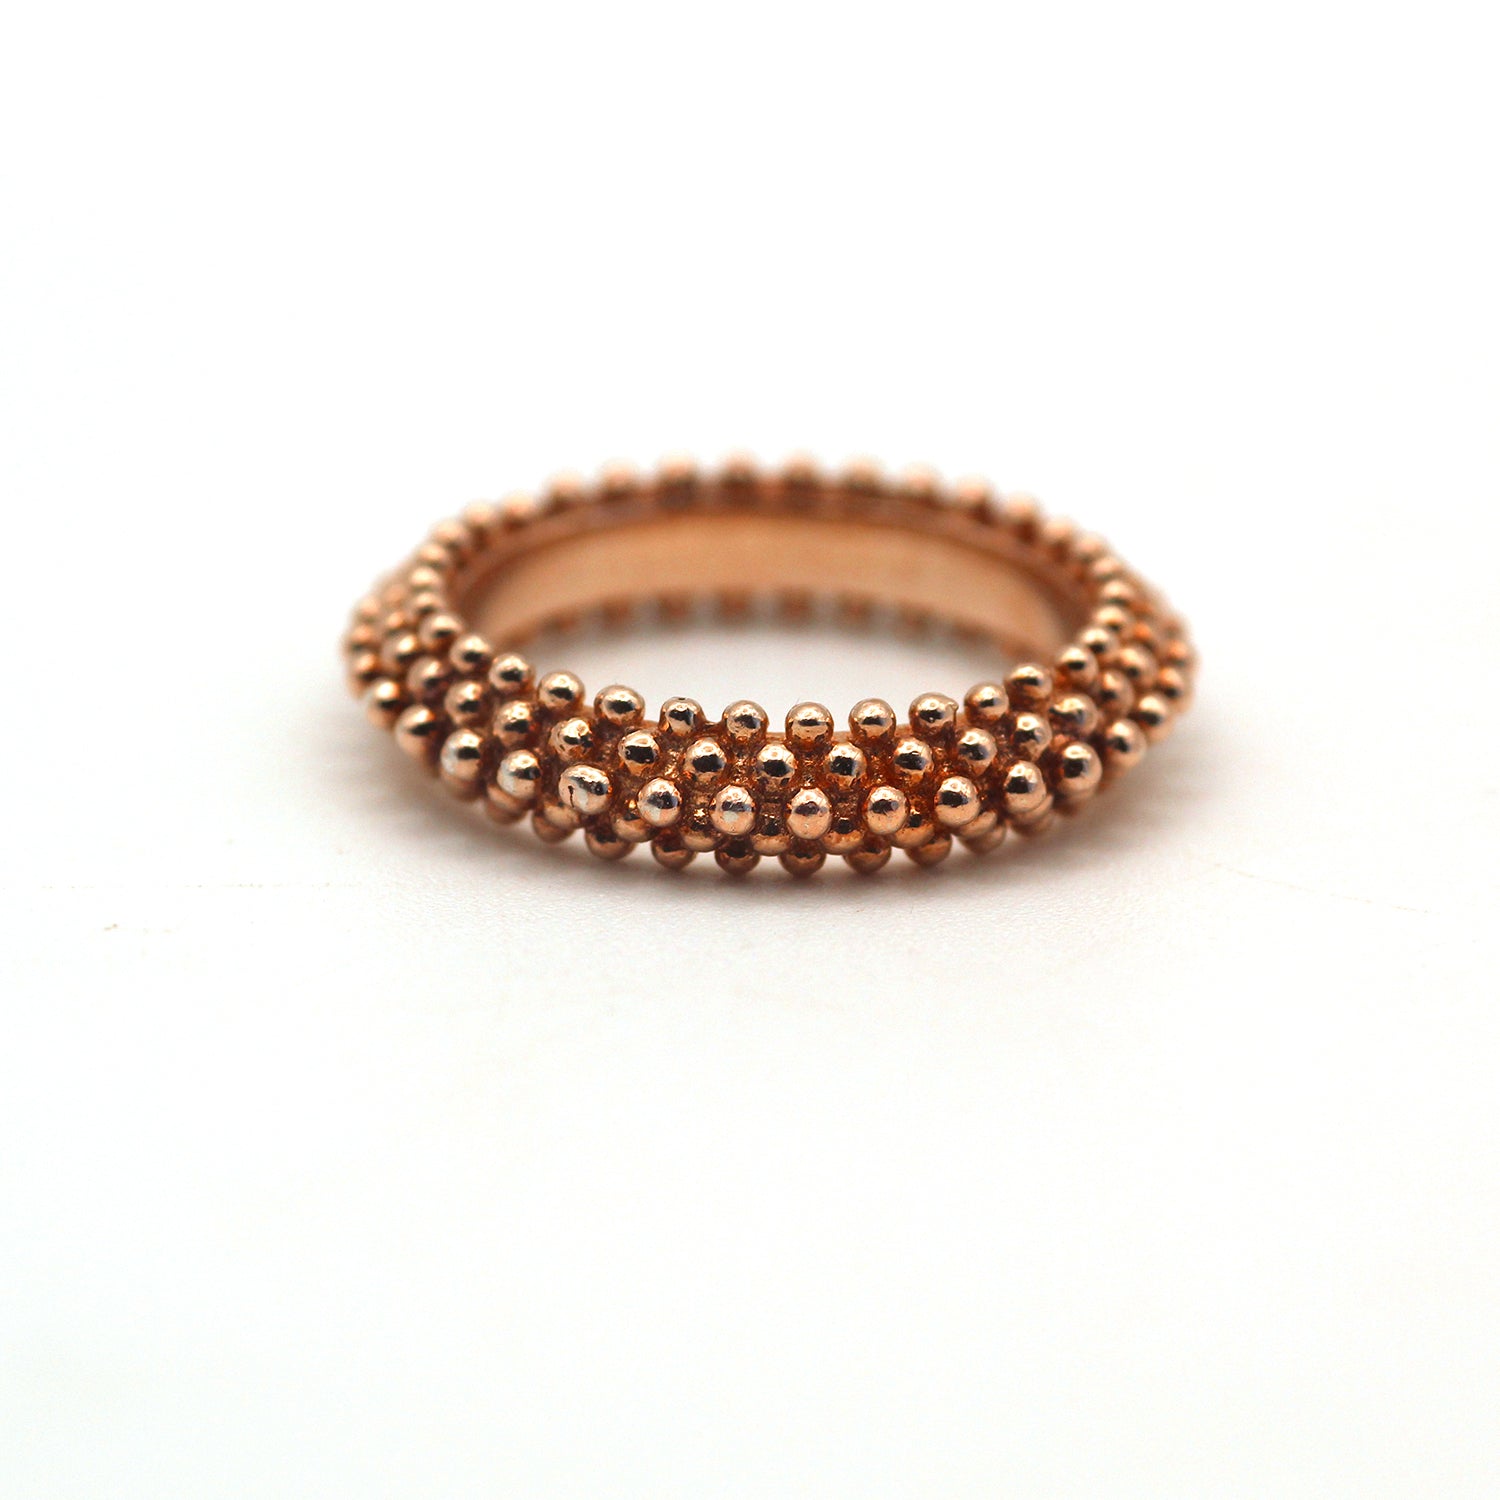 Handmade 14k Gold Ball Texture Ring.